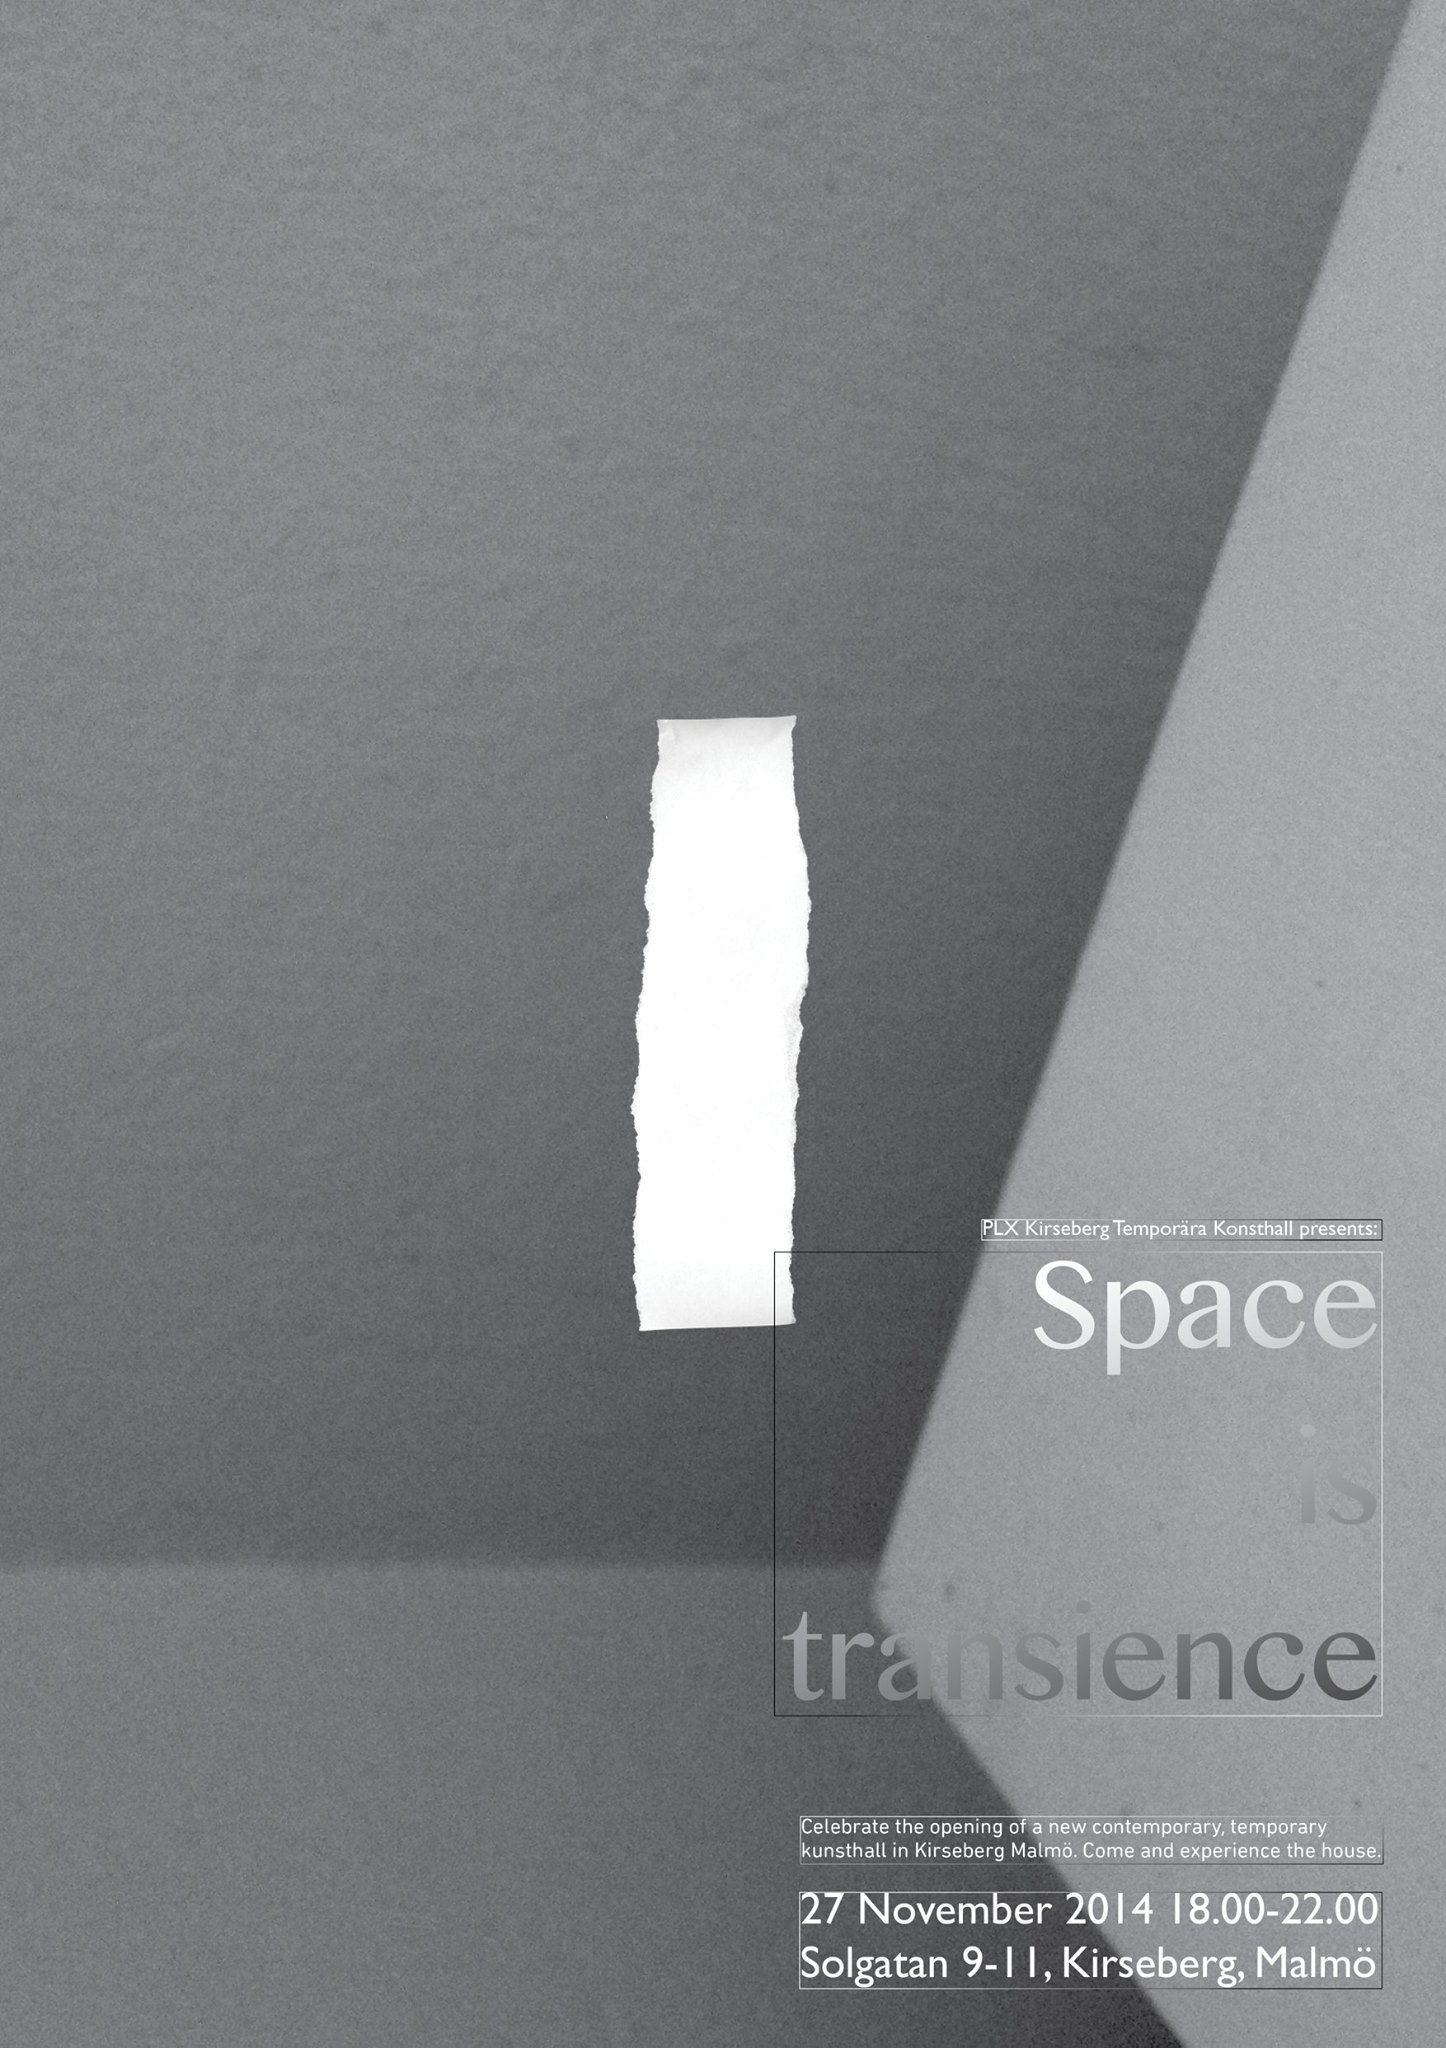 Kirseberg Temporära Konsthall: Space is Transience